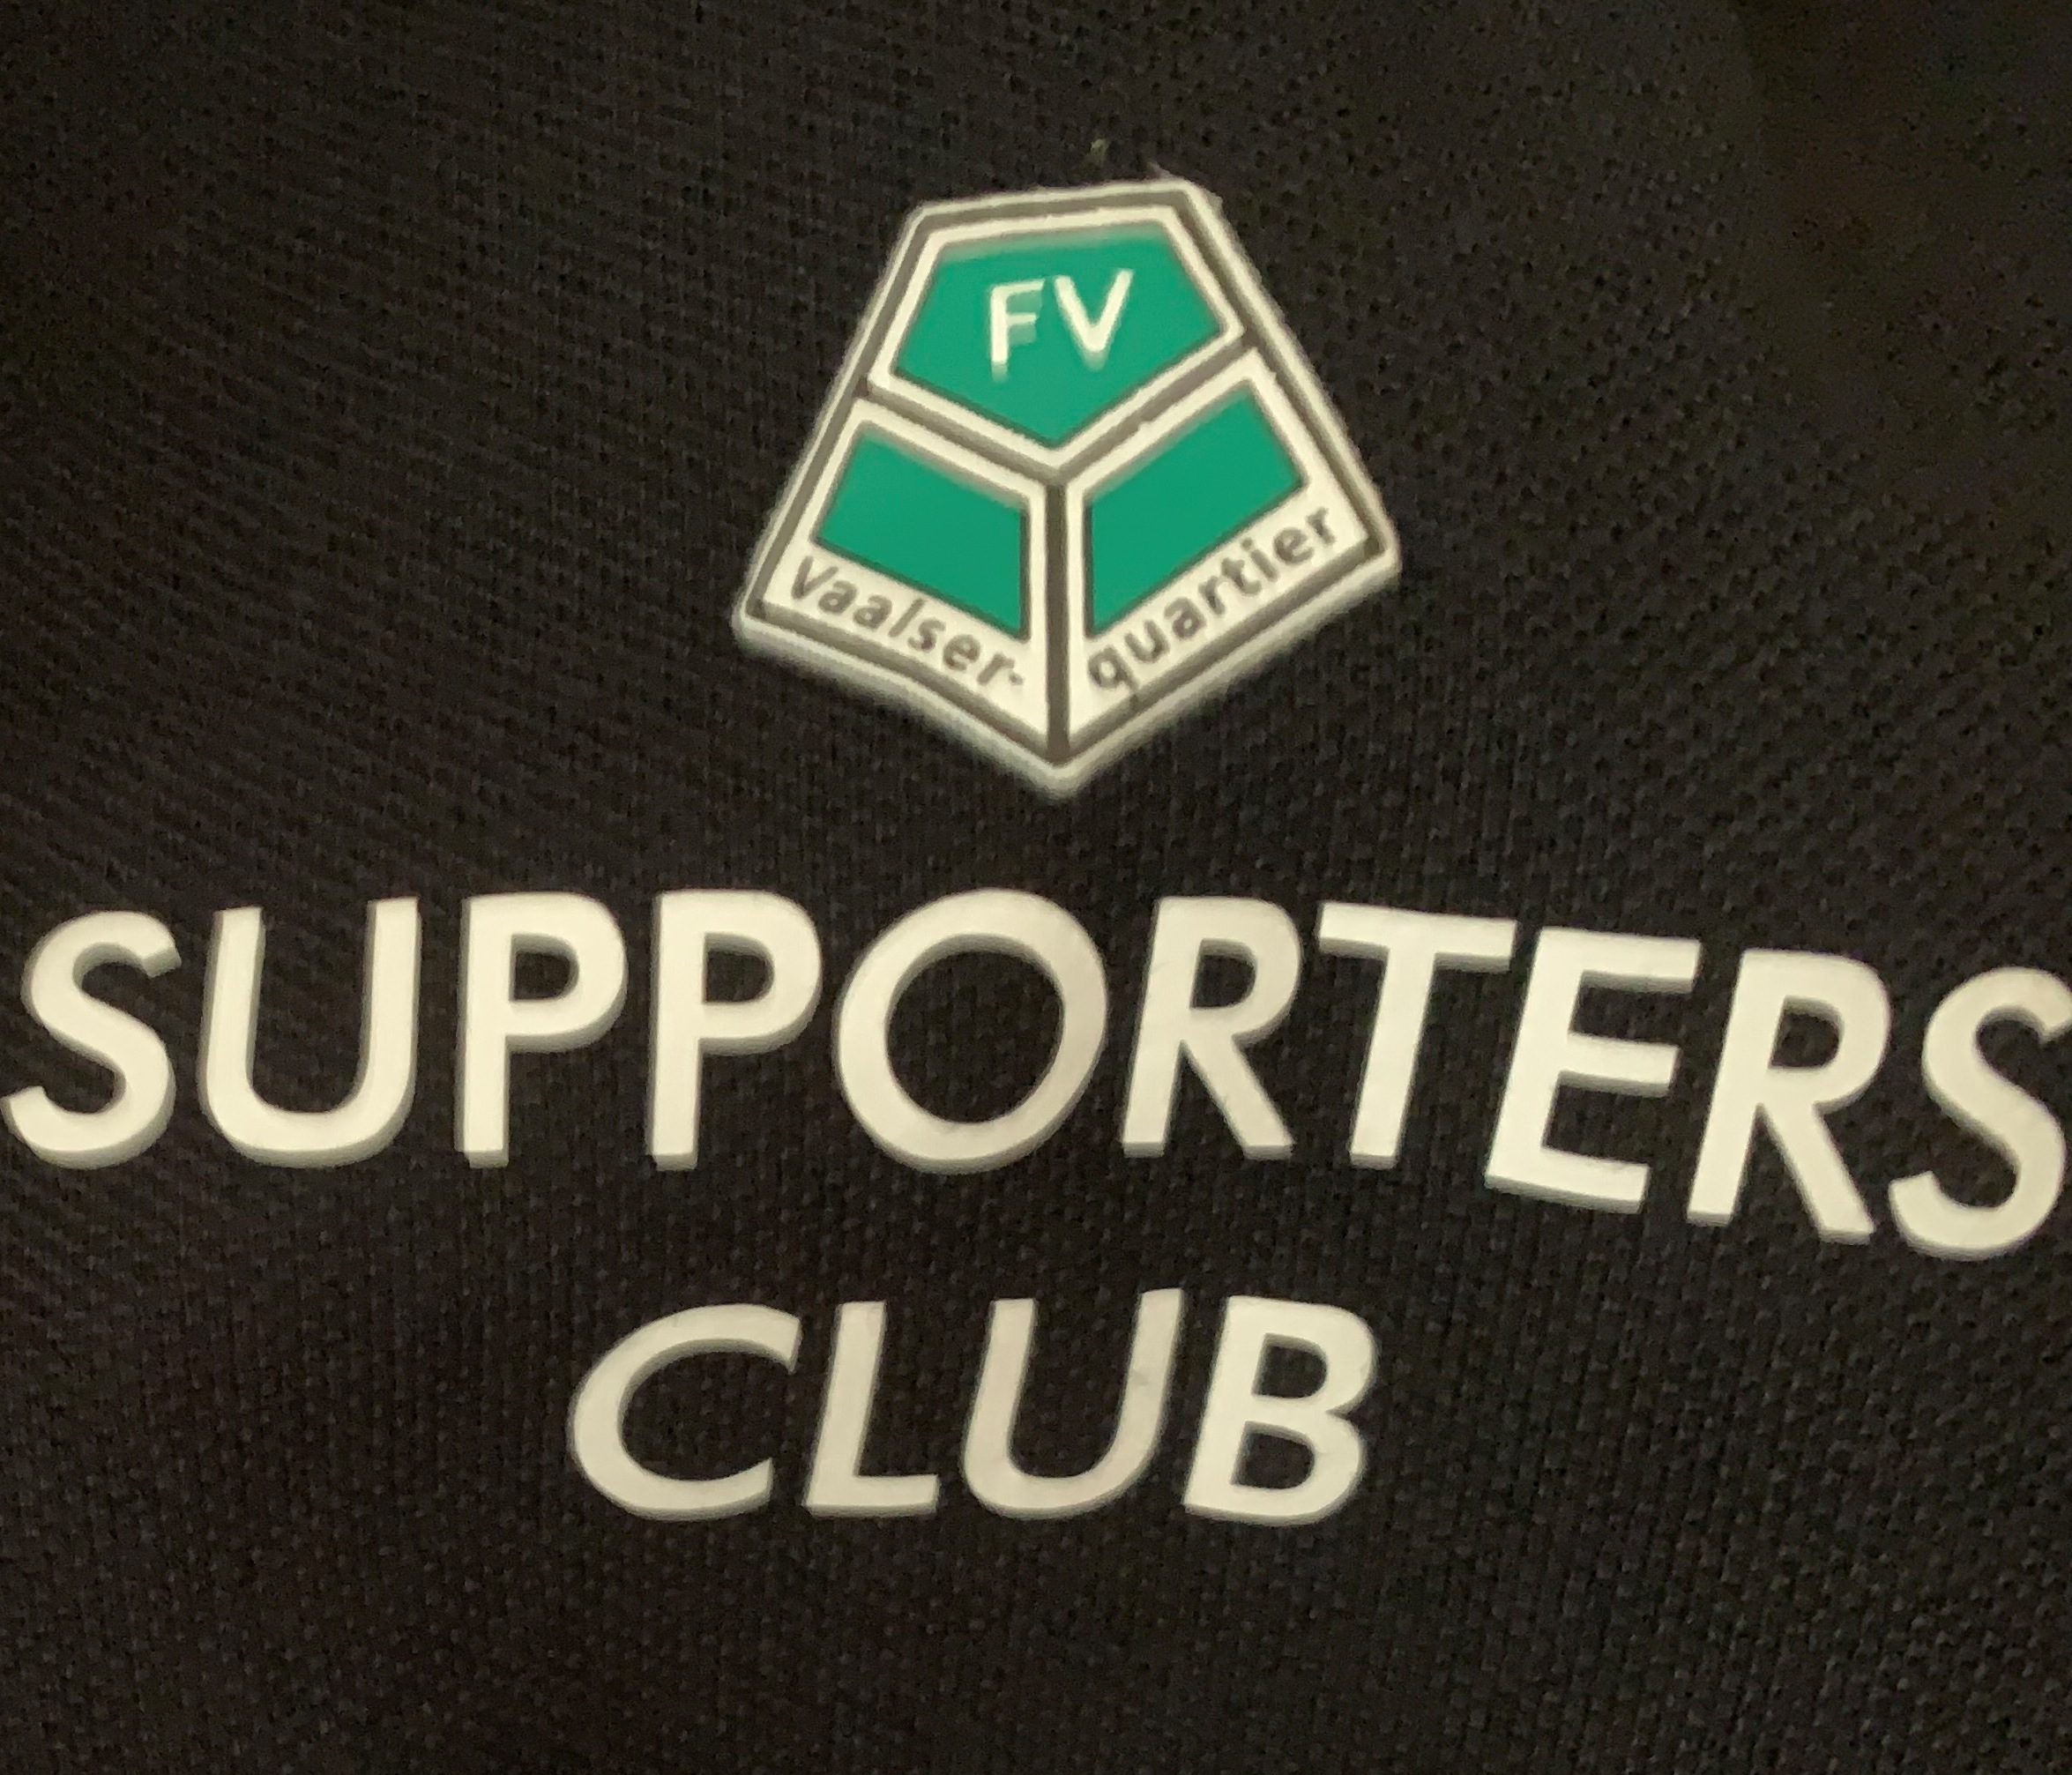 Sponsoring FVV Supporters Club 